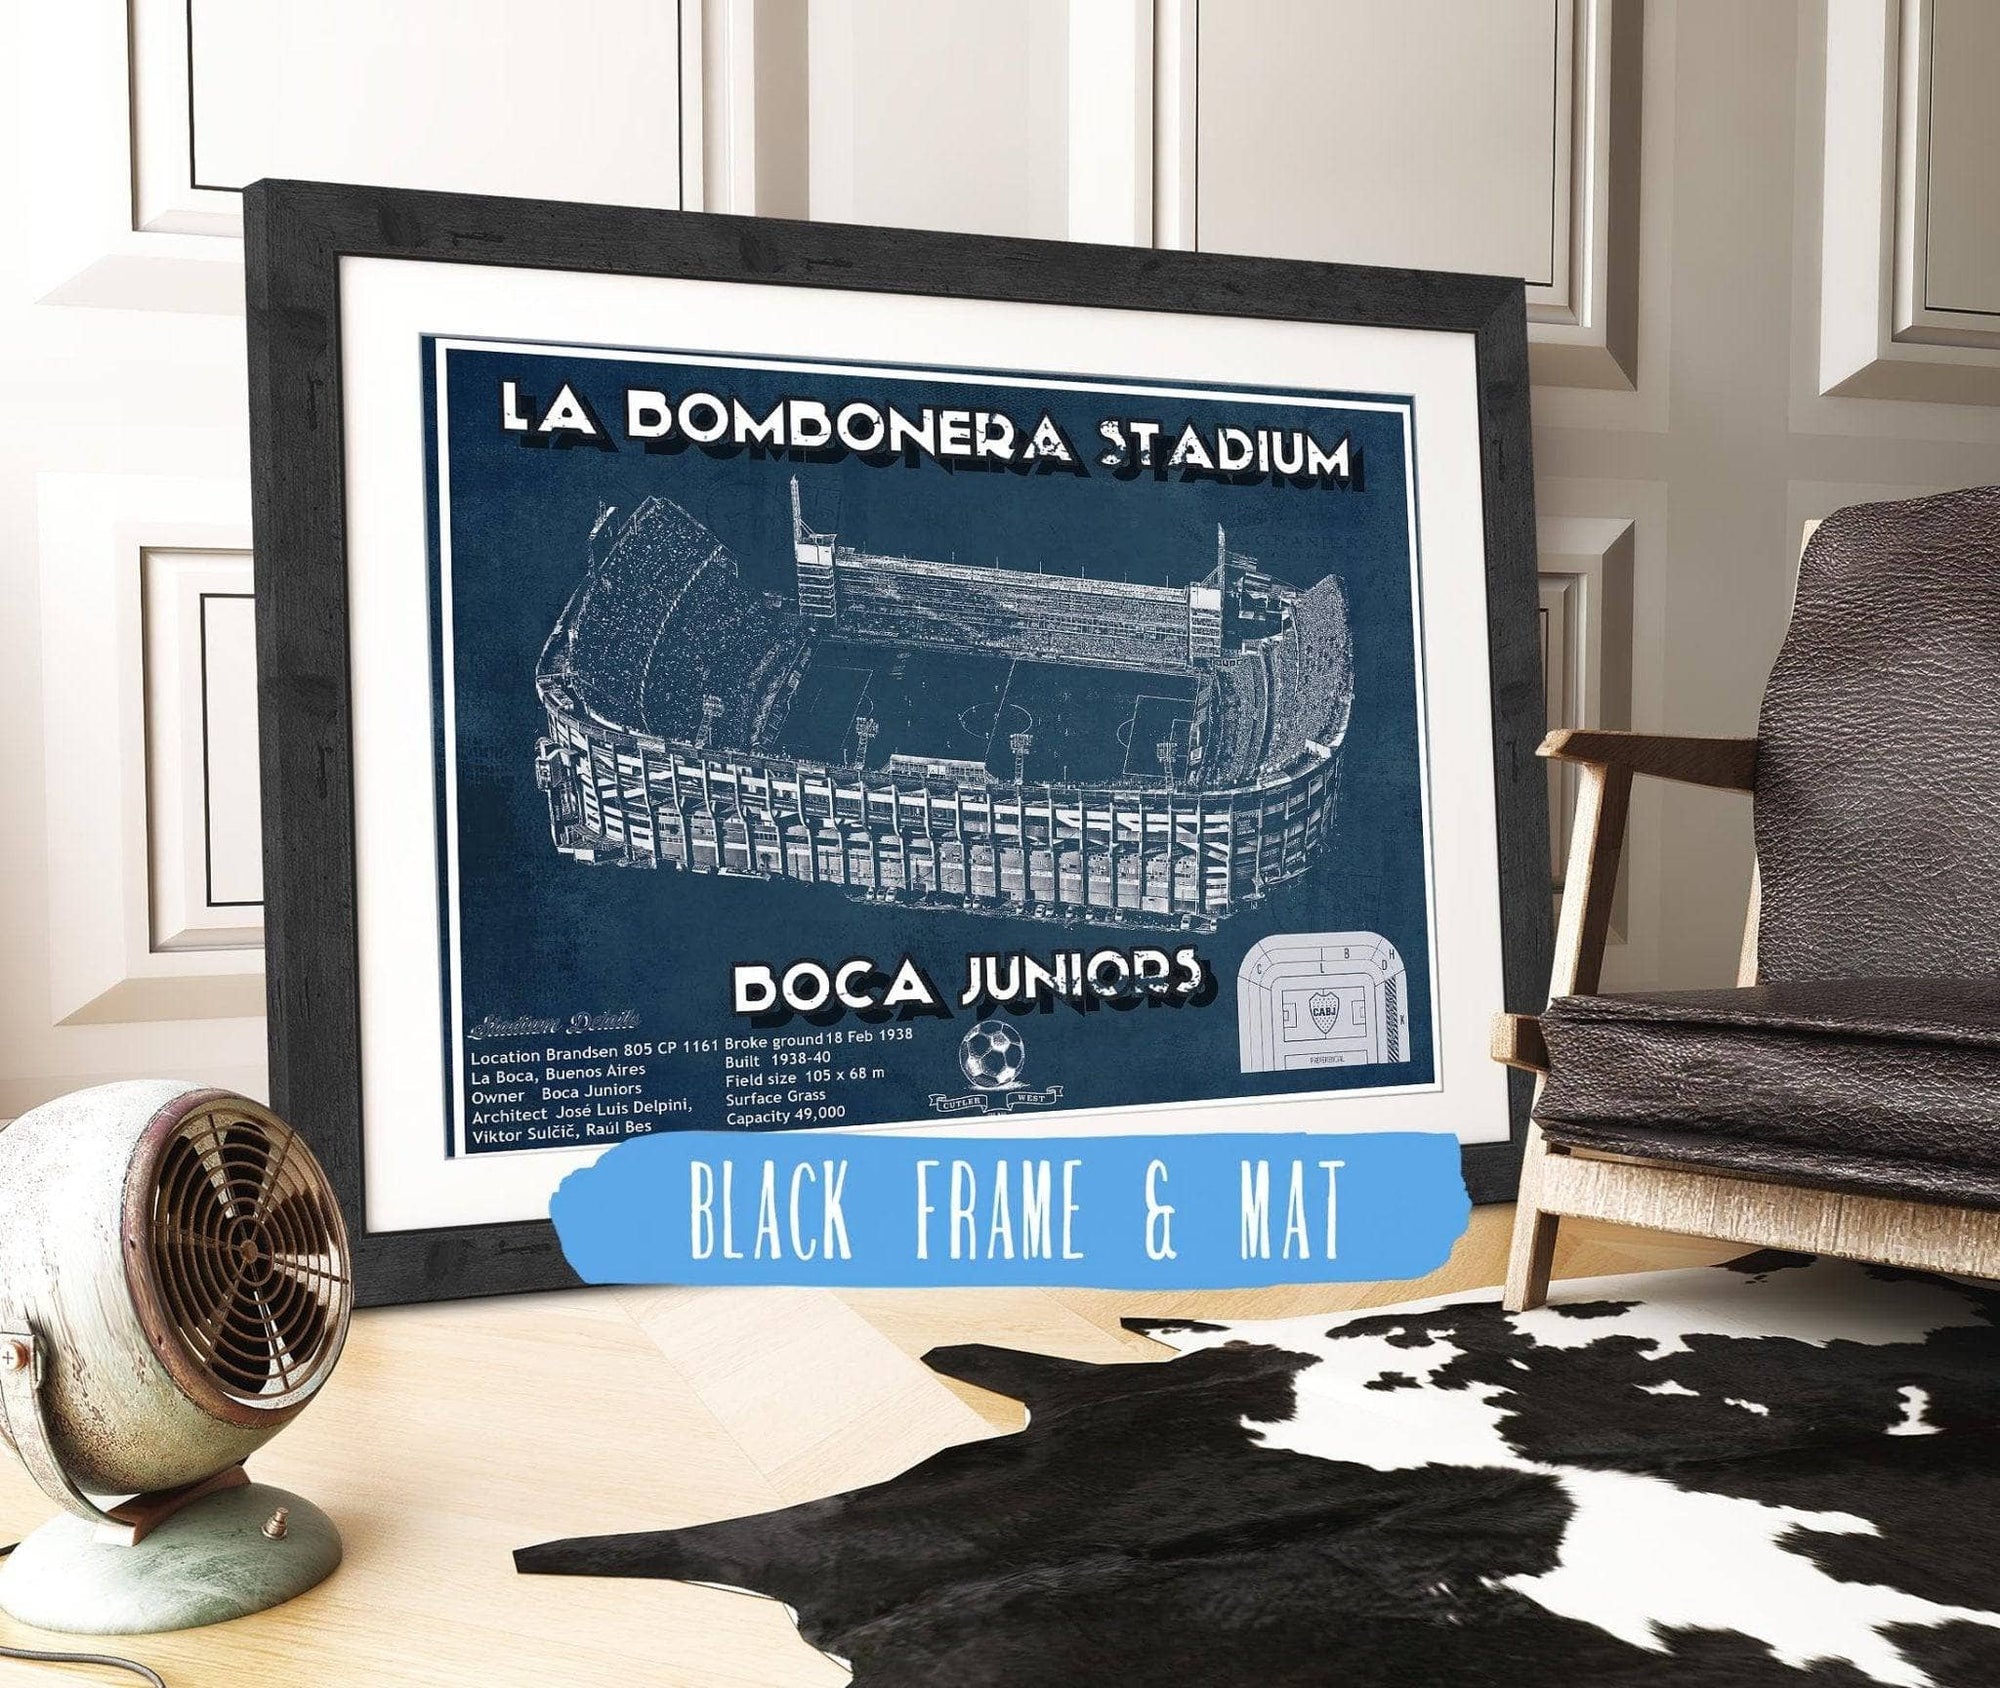 Cutler West Soccer Collection 14" x 11" / Black Frame & Mat Boca Juniors F.C La Bombonera Stadium Soccer Print 2 734227953-TOP